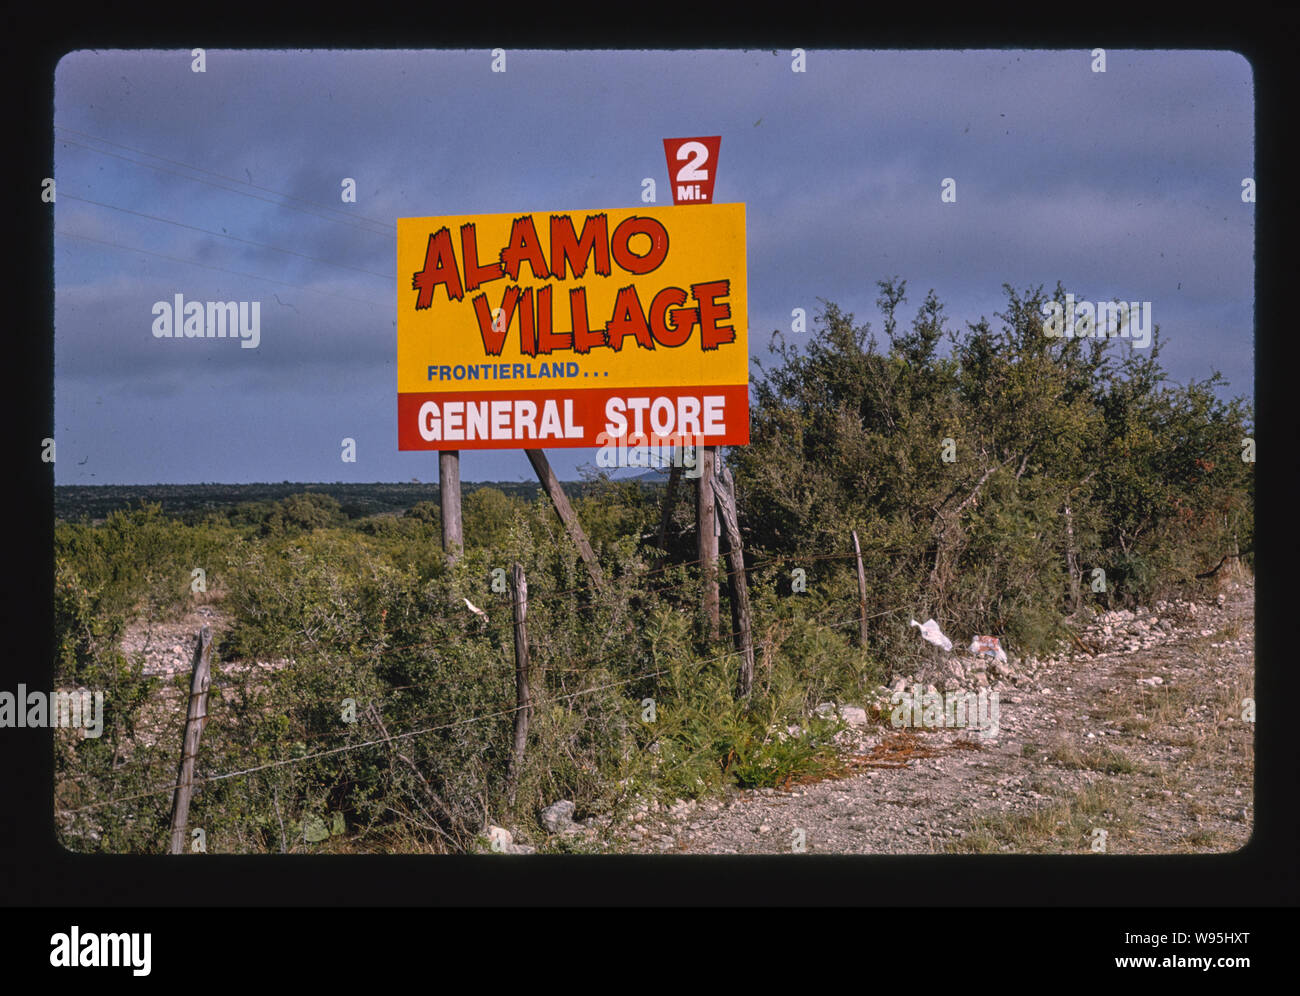 Alamo village billboard, Route 674, Brackettville, Texas Banque D'Images